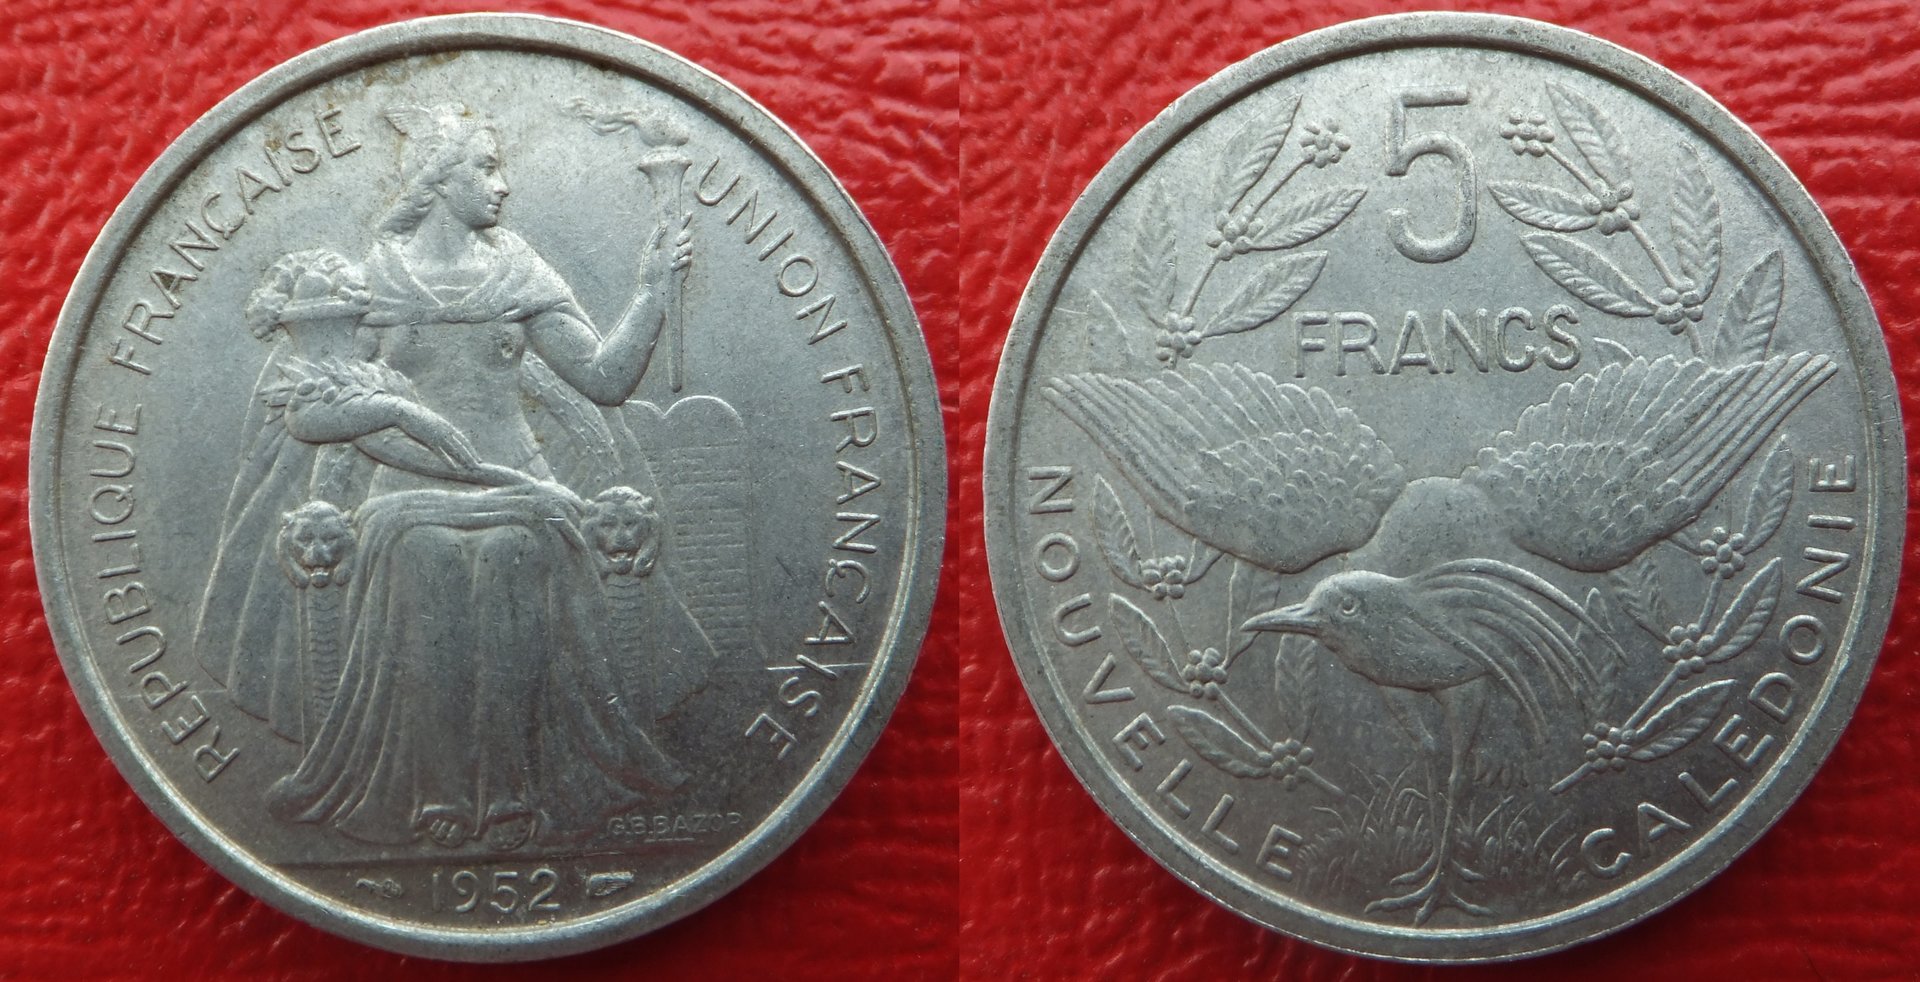 French New Caledonia 5 francs 1952 (3).JPG